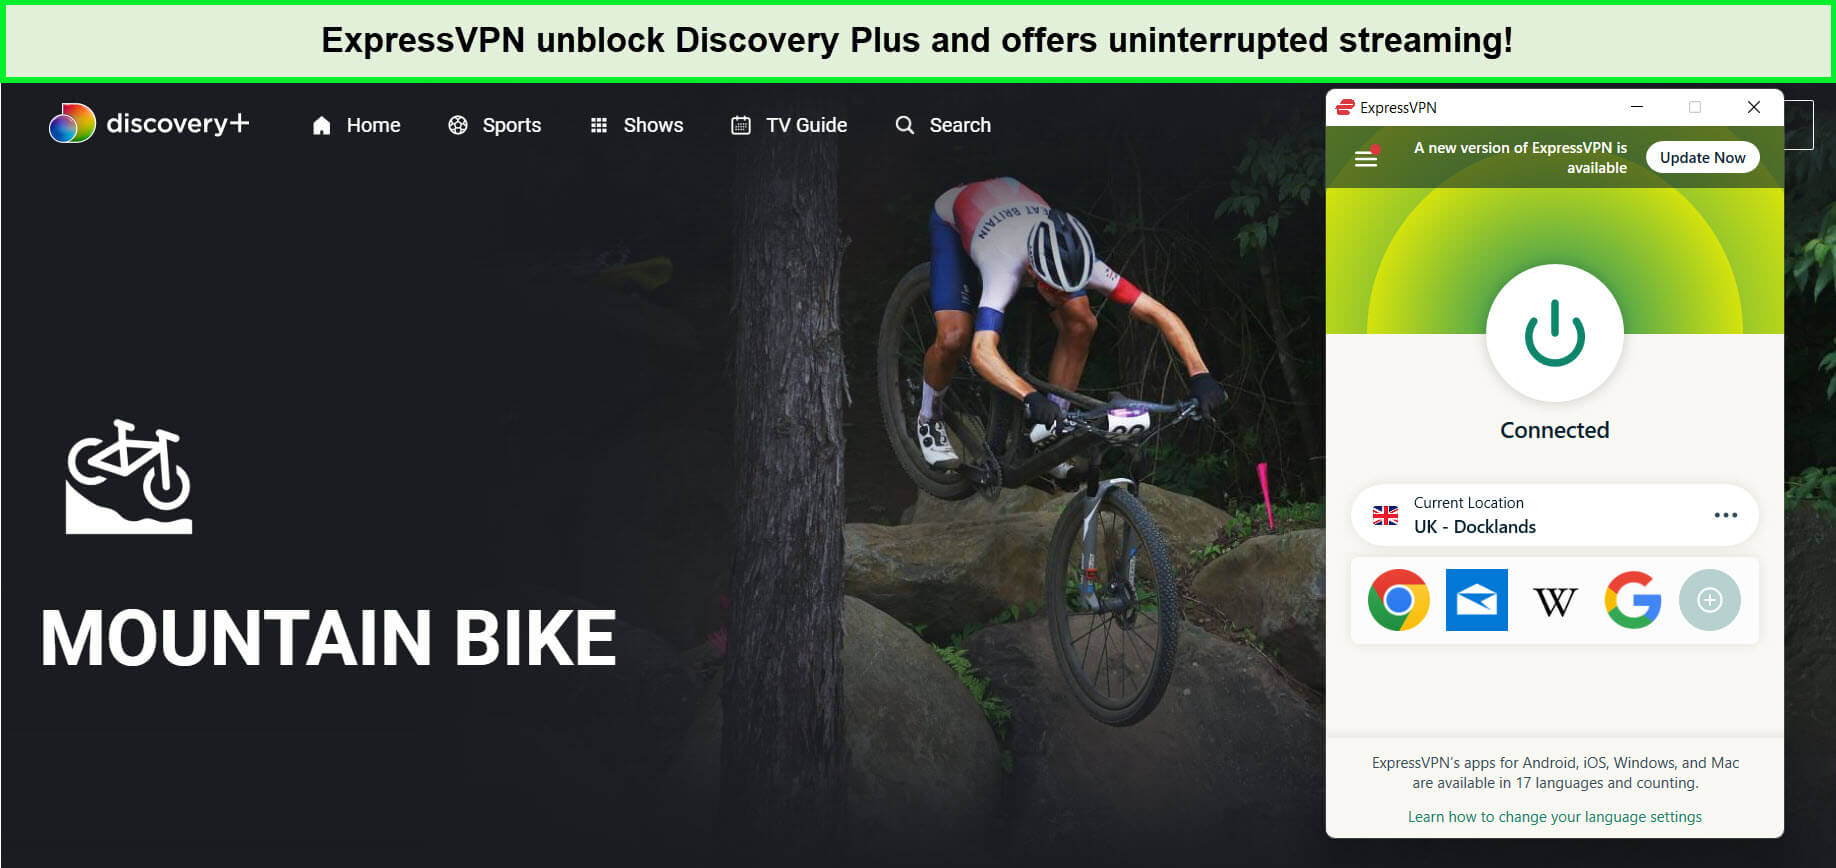 expressvpn-unblocks-uci-mountain-bike-world-series-in-UAE-on-discovery-plus